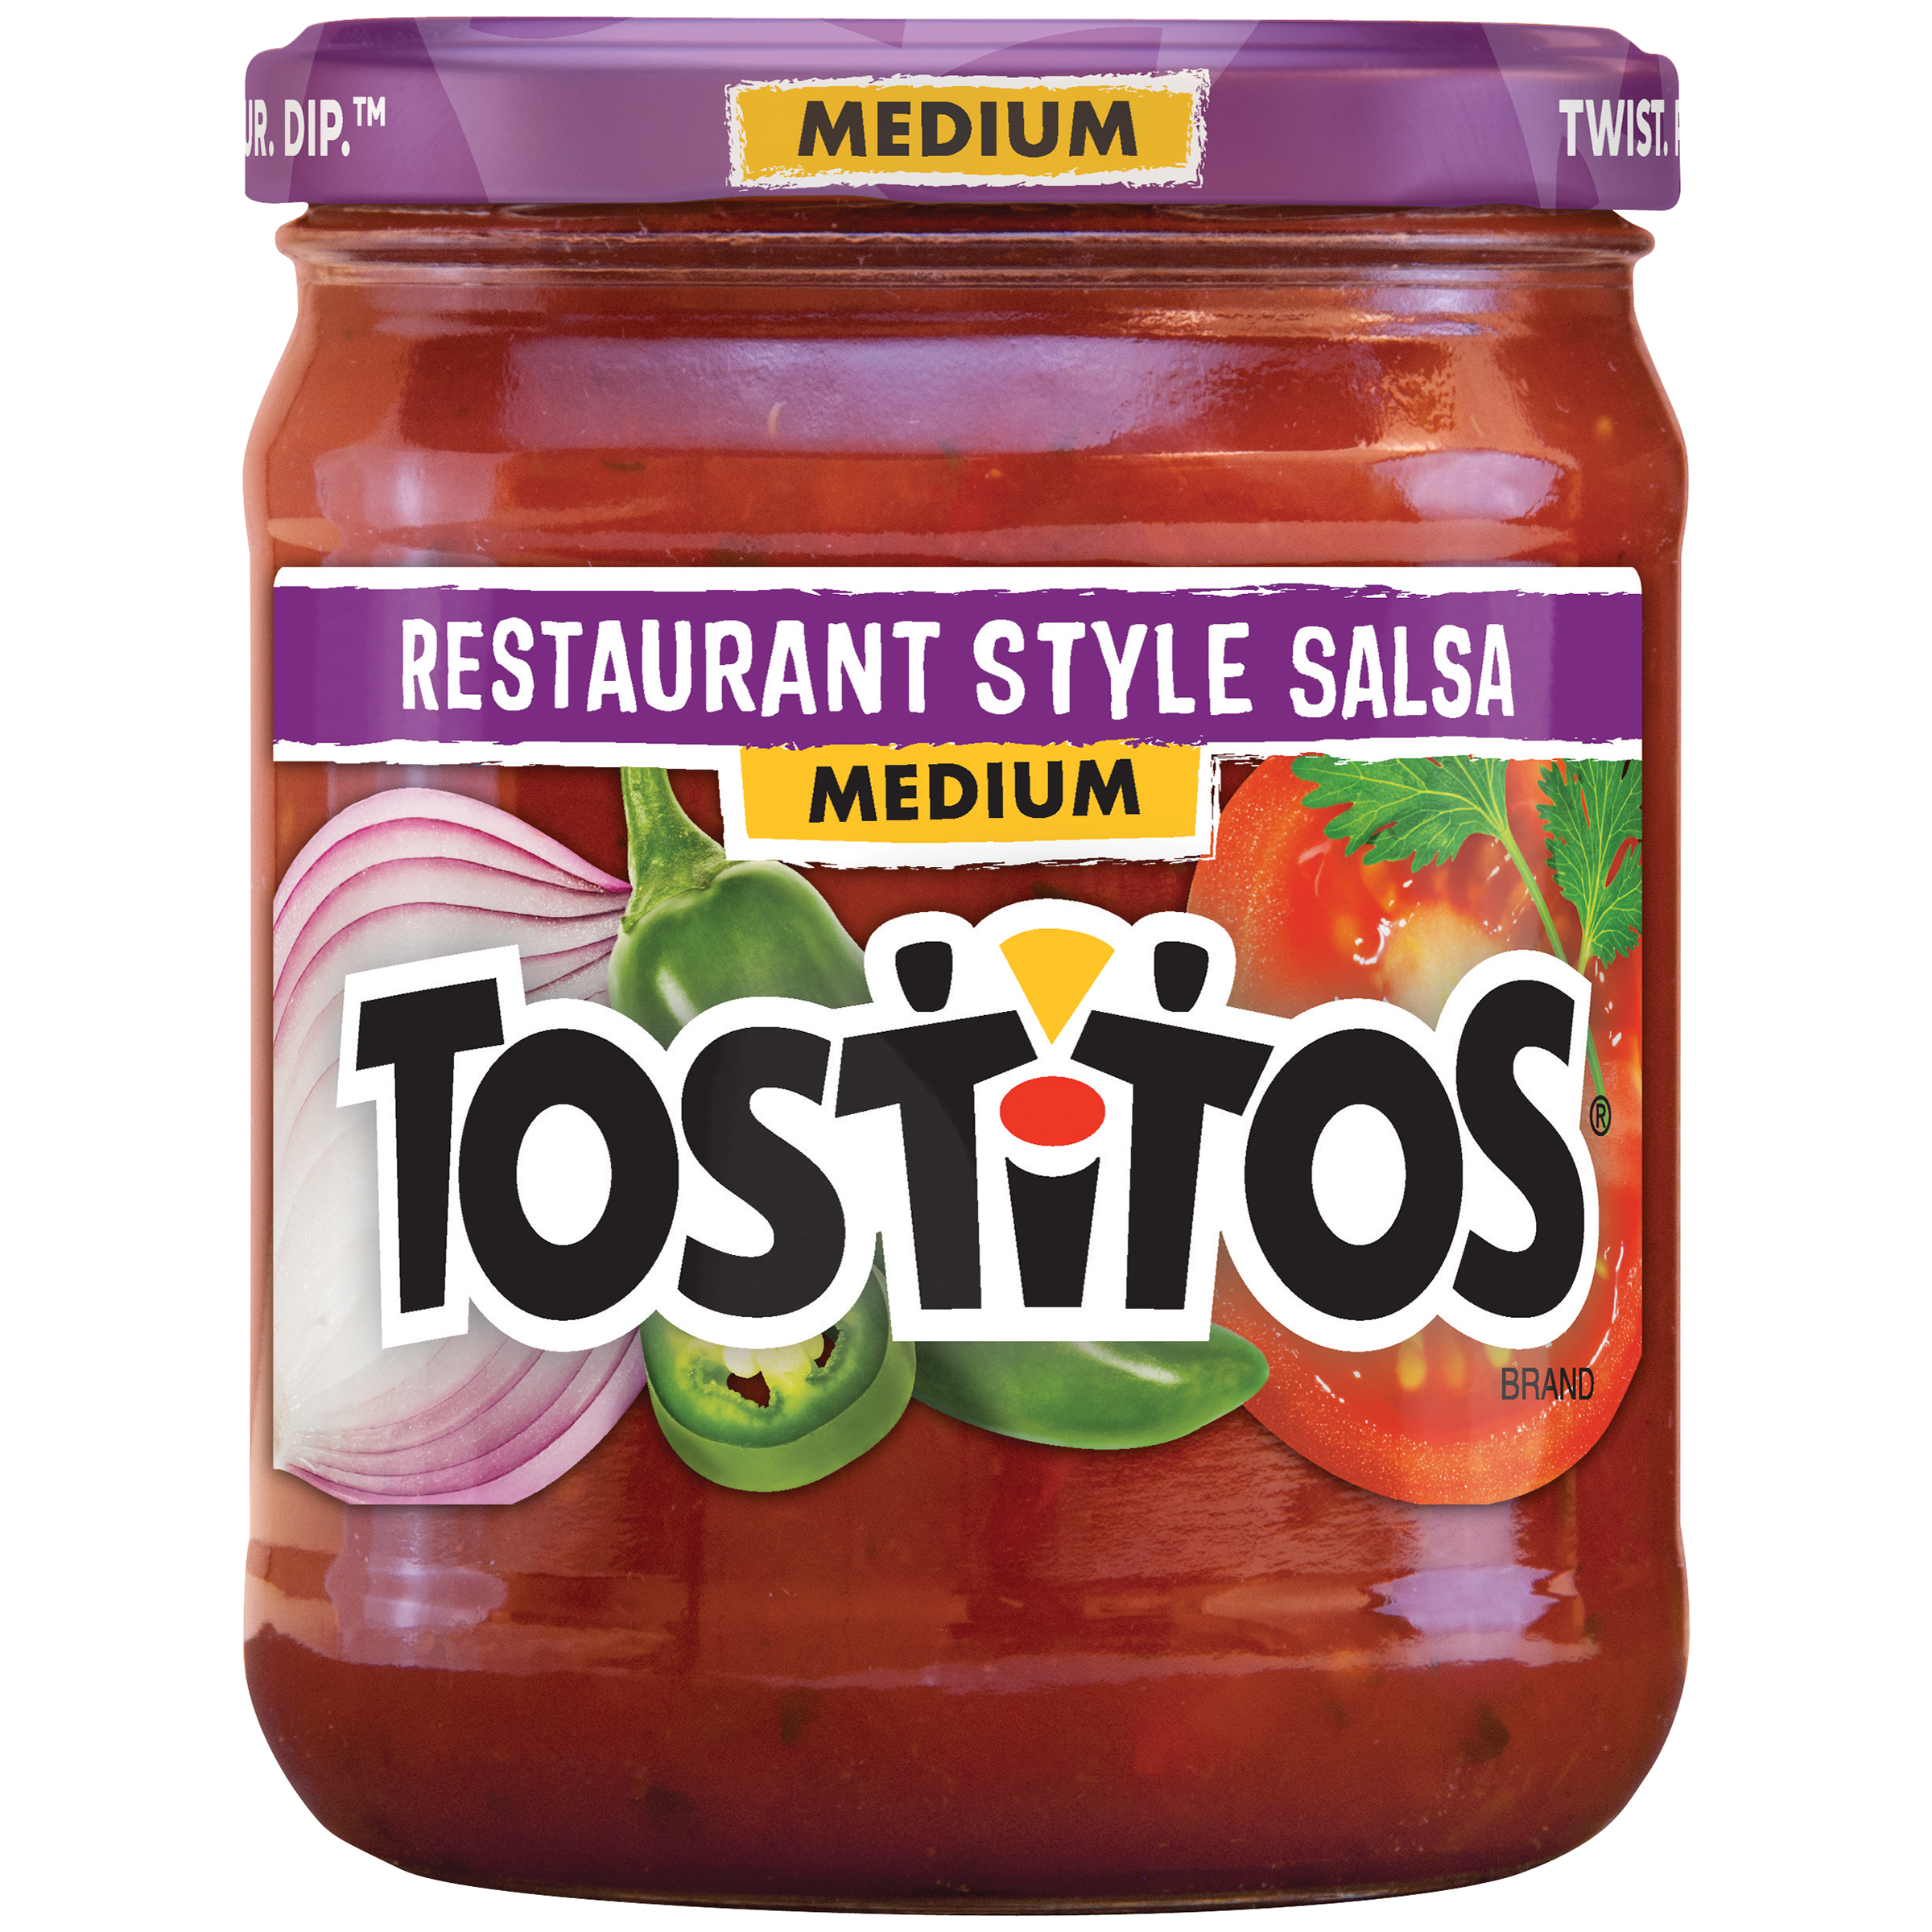 Tostitos Restaurant Style Salsa 15.5 oz